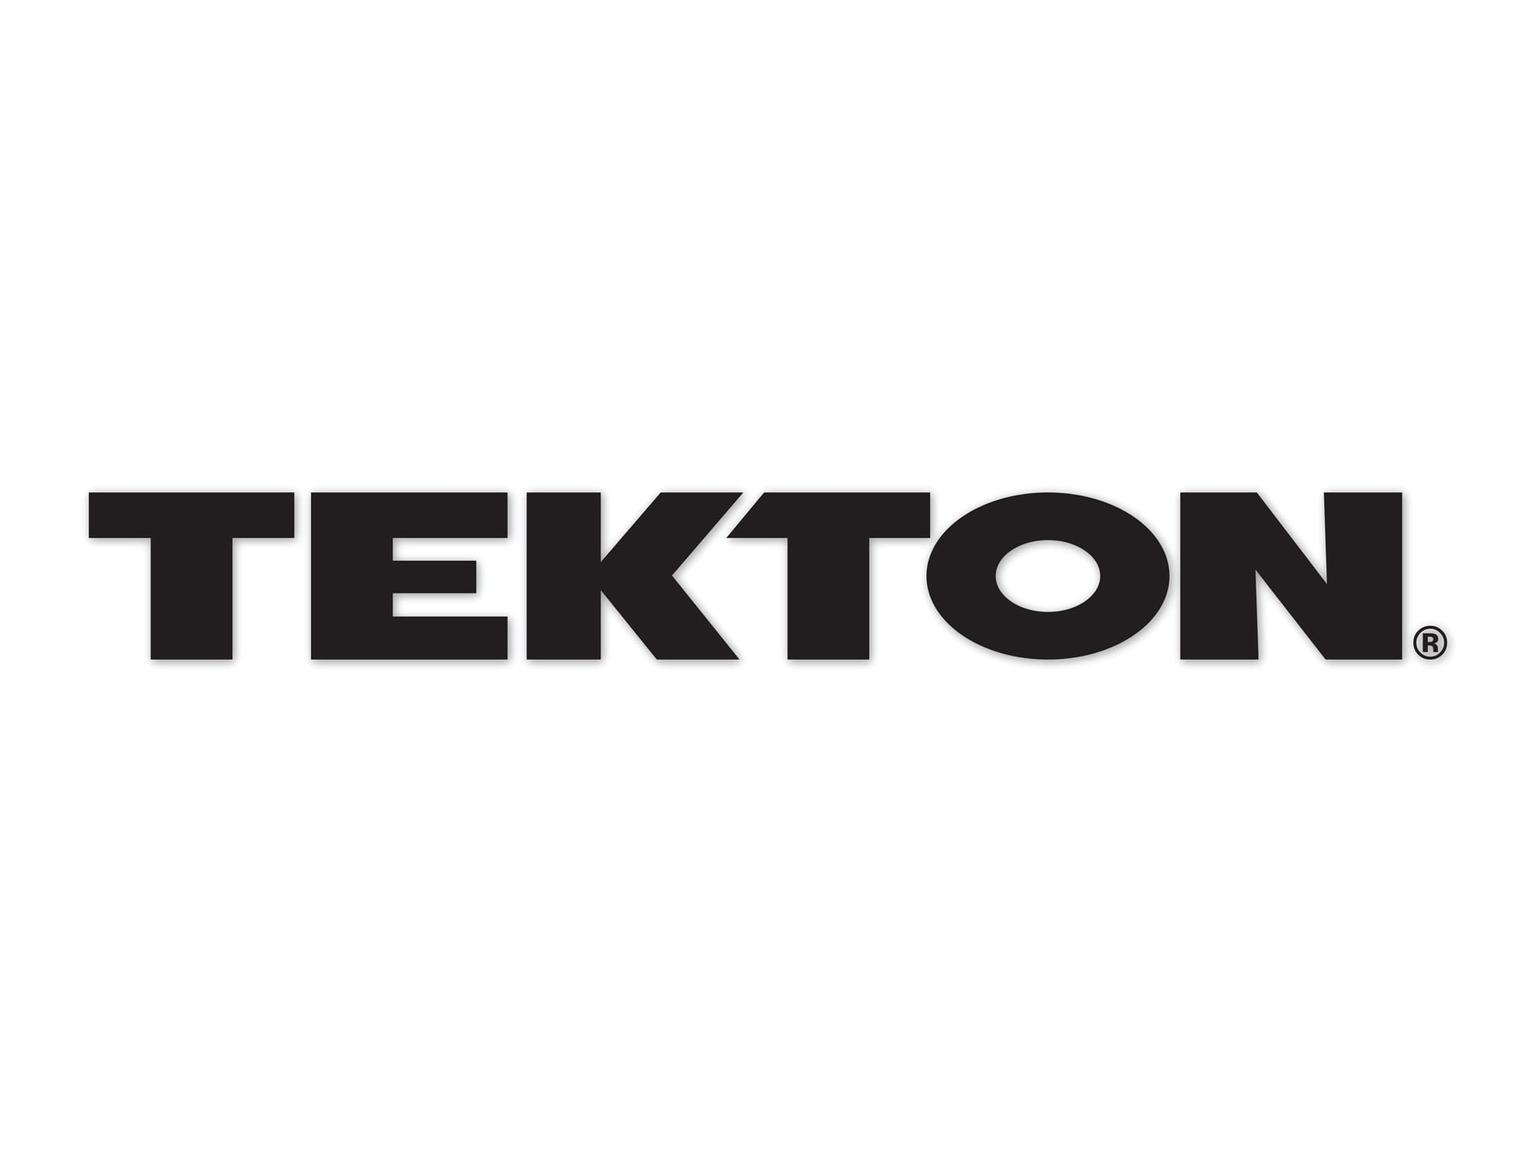 TEKTON APG51003-T Tekton Decal, Black (20 x 2-1/2 in.)